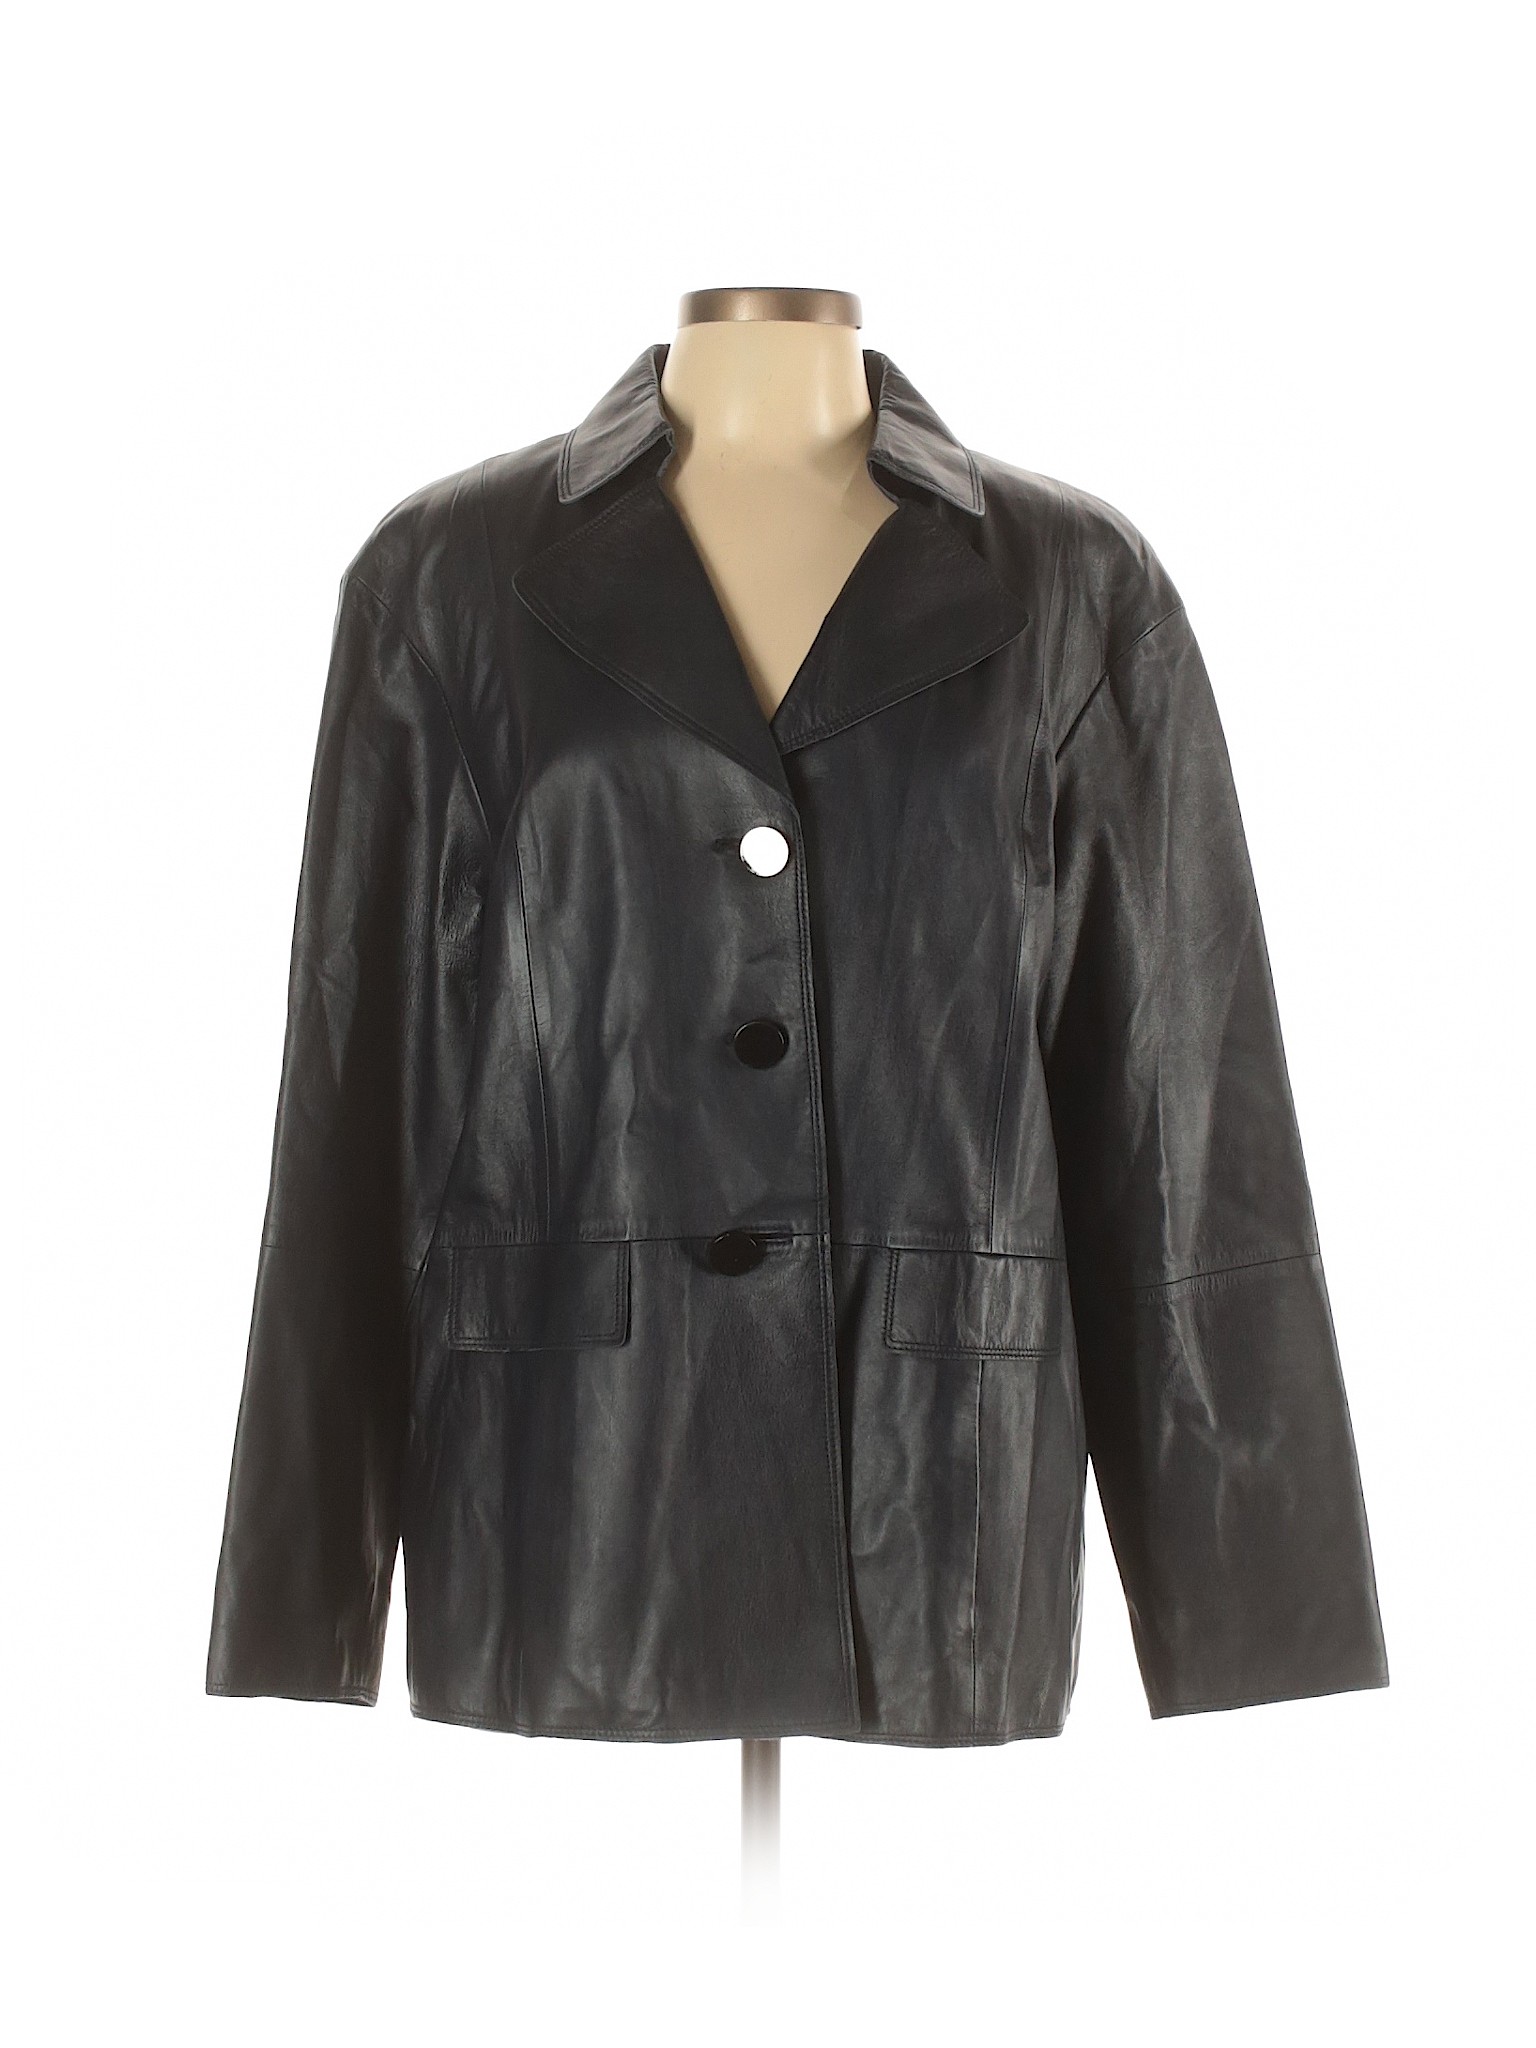 Worth New York Women Black Leather Jacket L | eBay